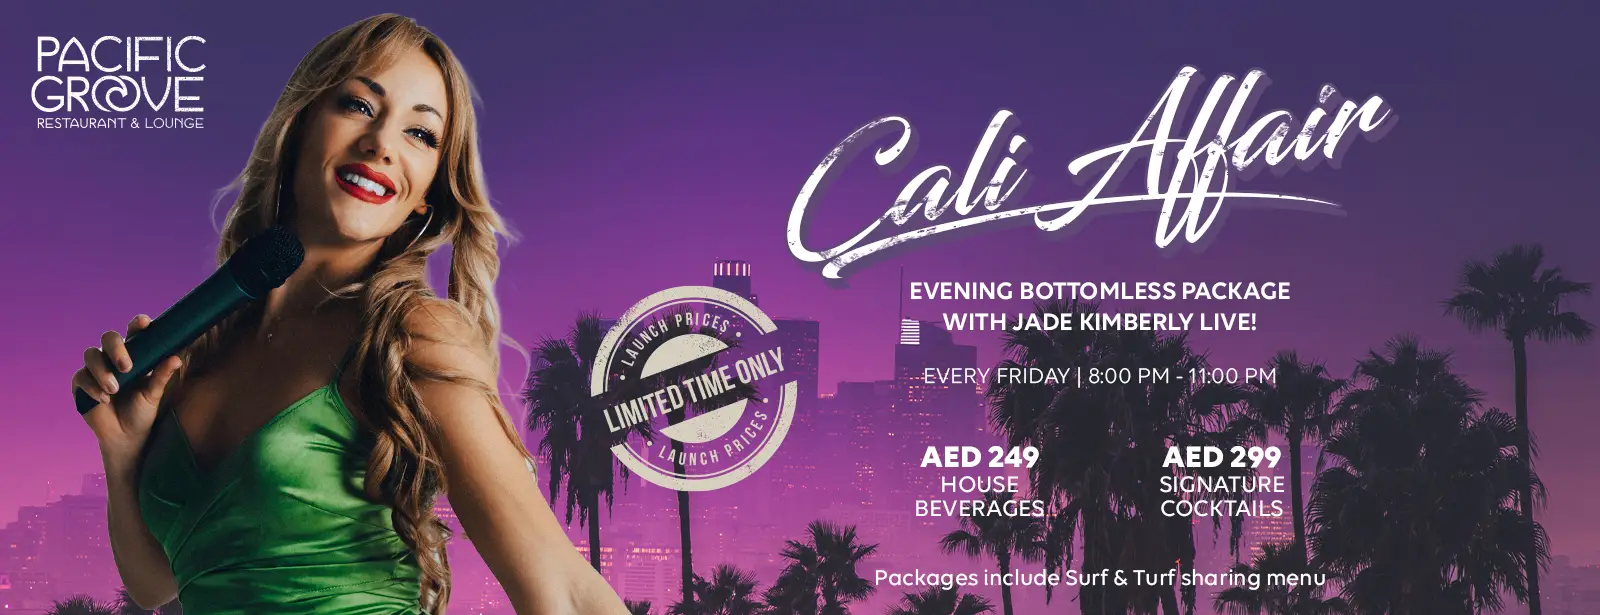 Cali Affair with Jade Kimberley Live - Wow-Emirates